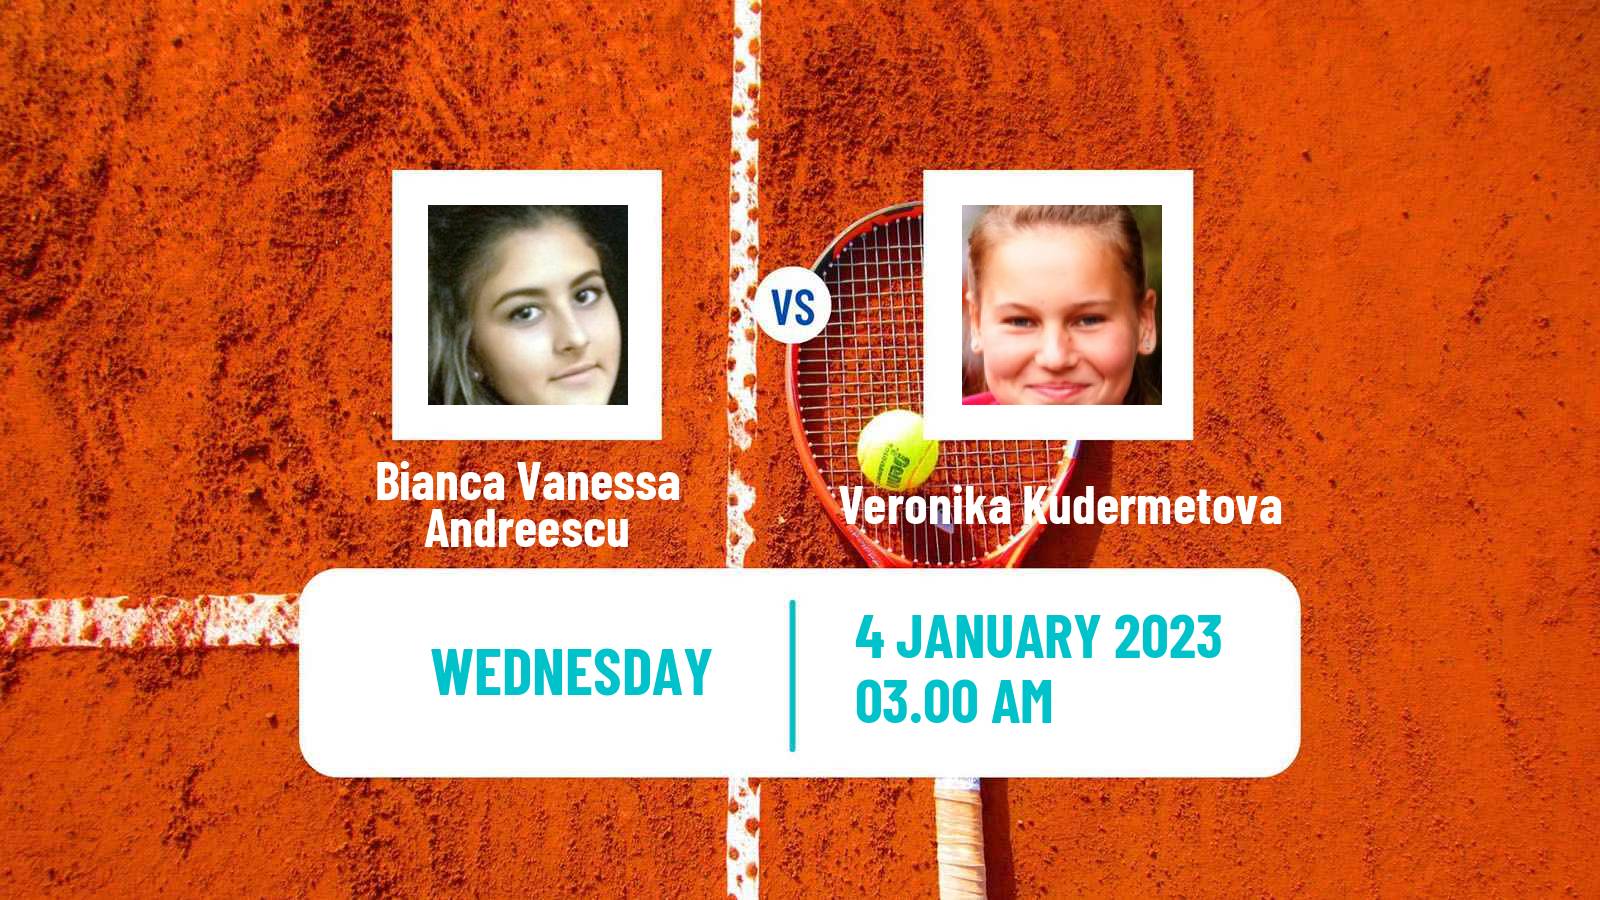 Tennis WTA Adelaide Bianca Vanessa Andreescu - Veronika Kudermetova